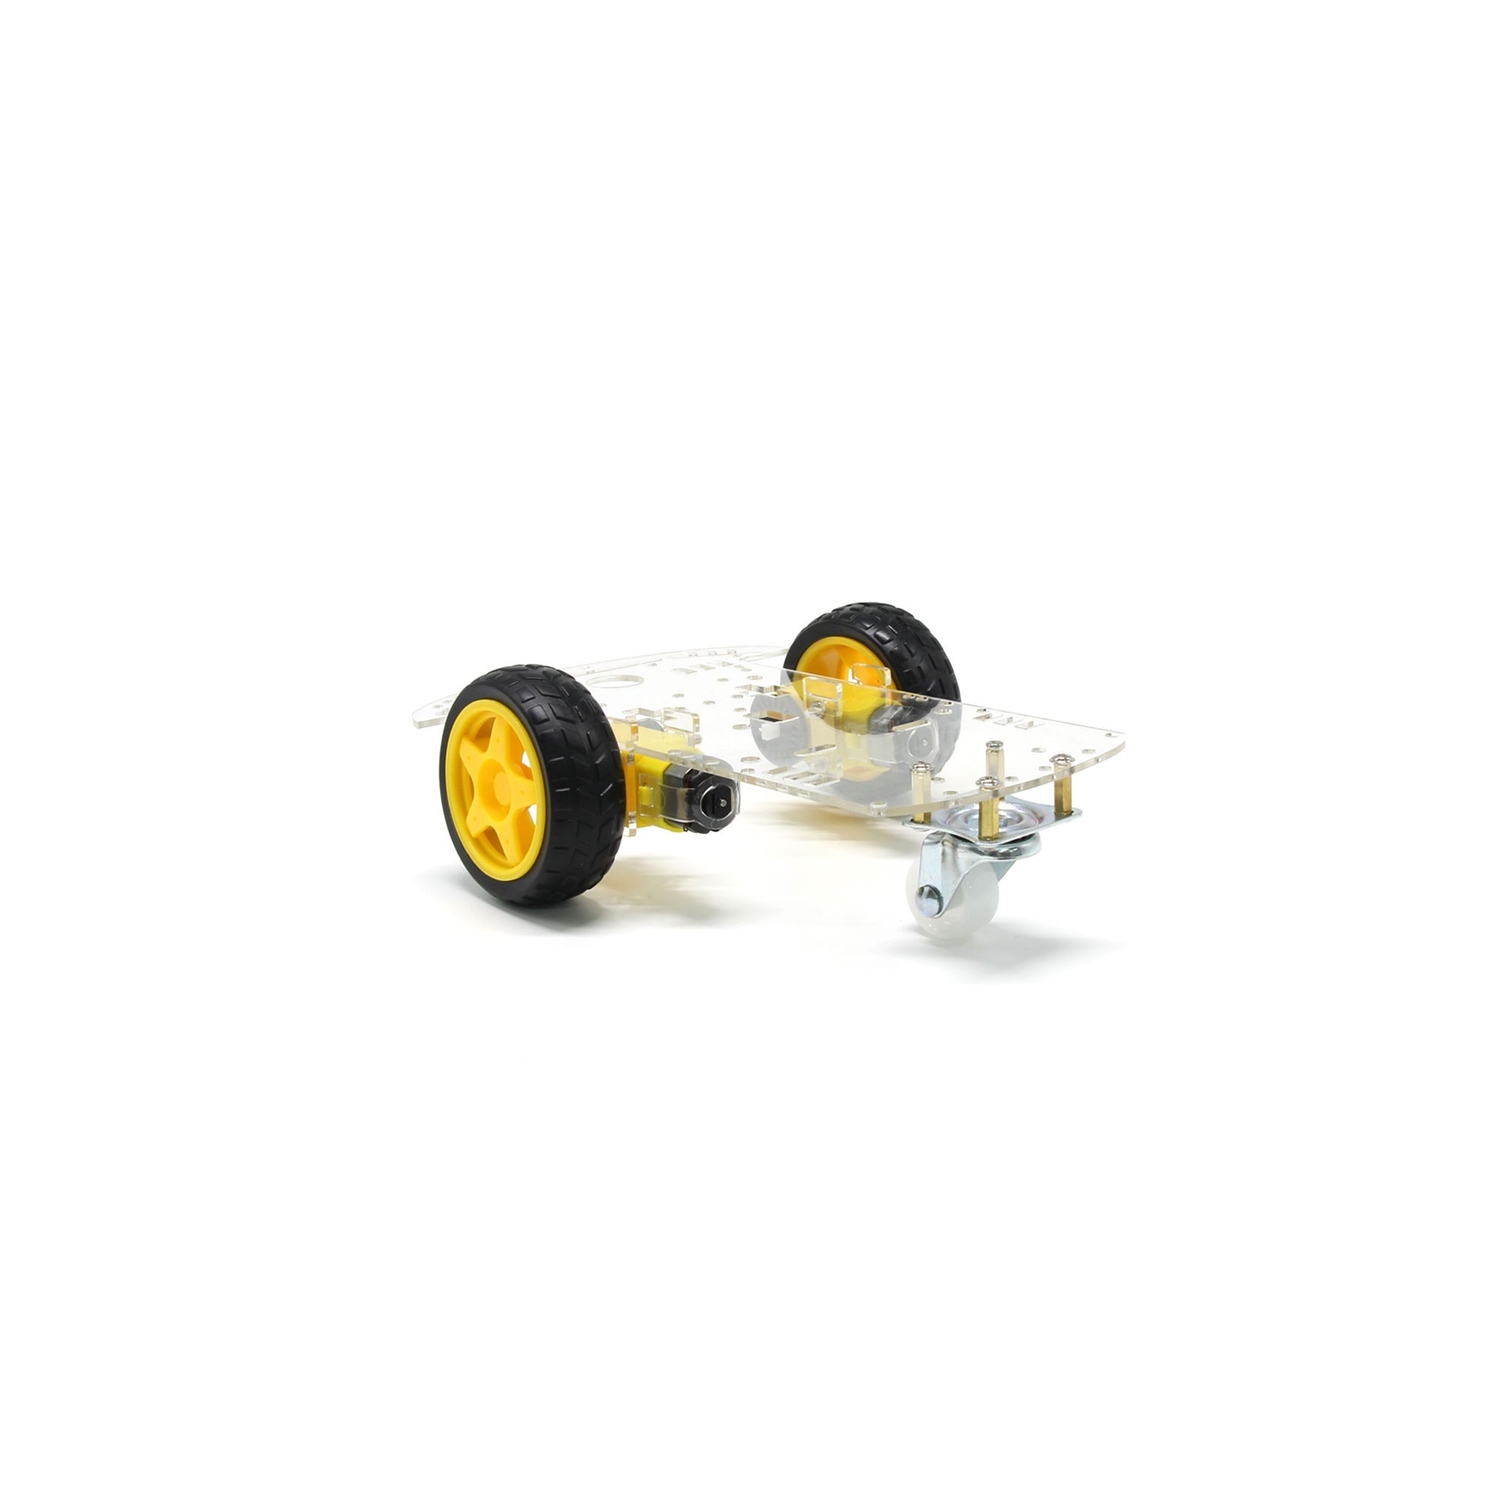 Globaltone 03541 Smart Motor Robot Car Chassis Battery Box Kit Speed Encoder for Arduino